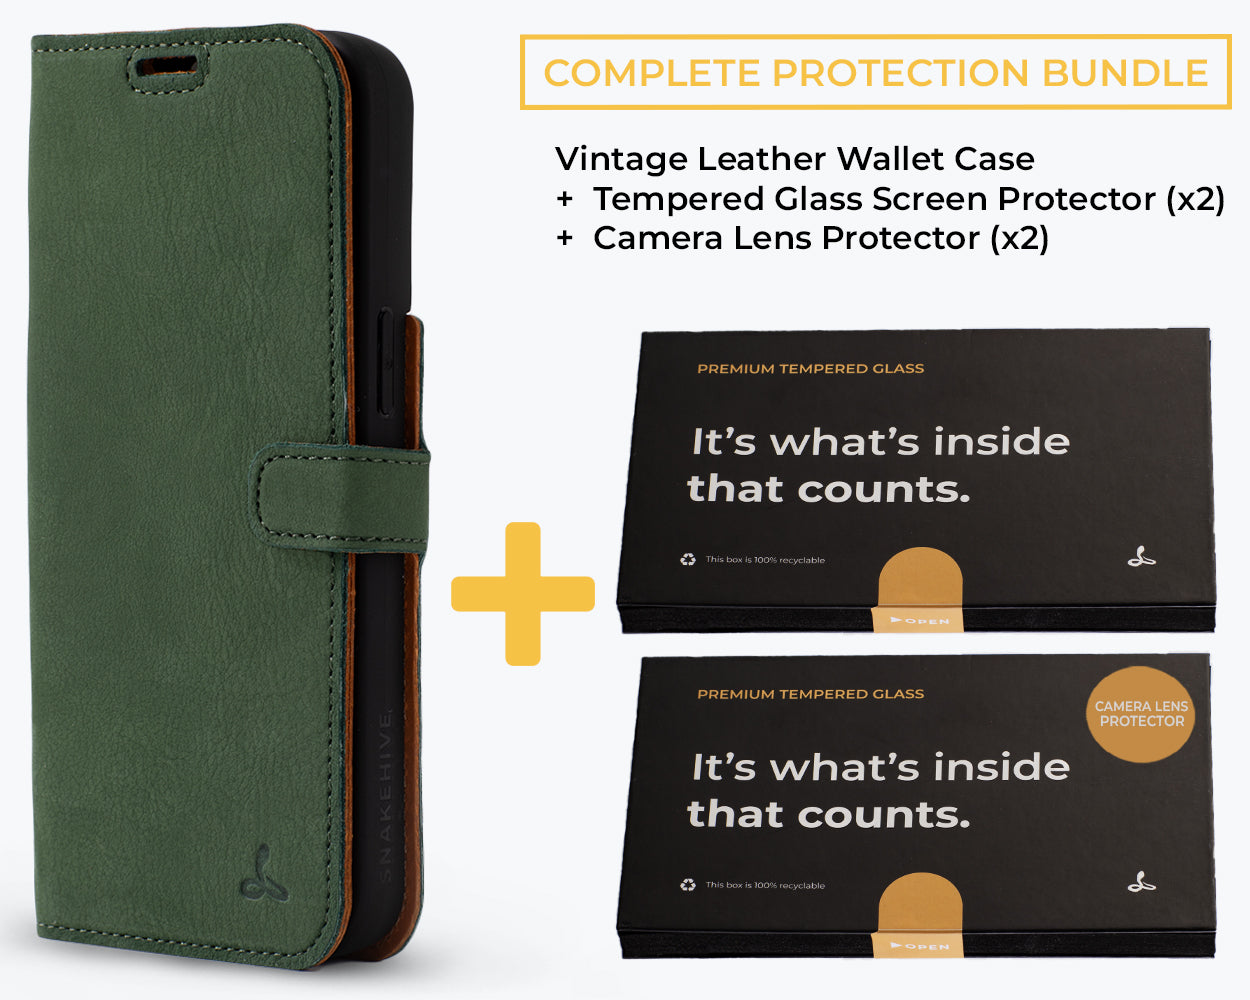 Complete Protection Bundle (Vintage Wallet) - Apple iPhone 11